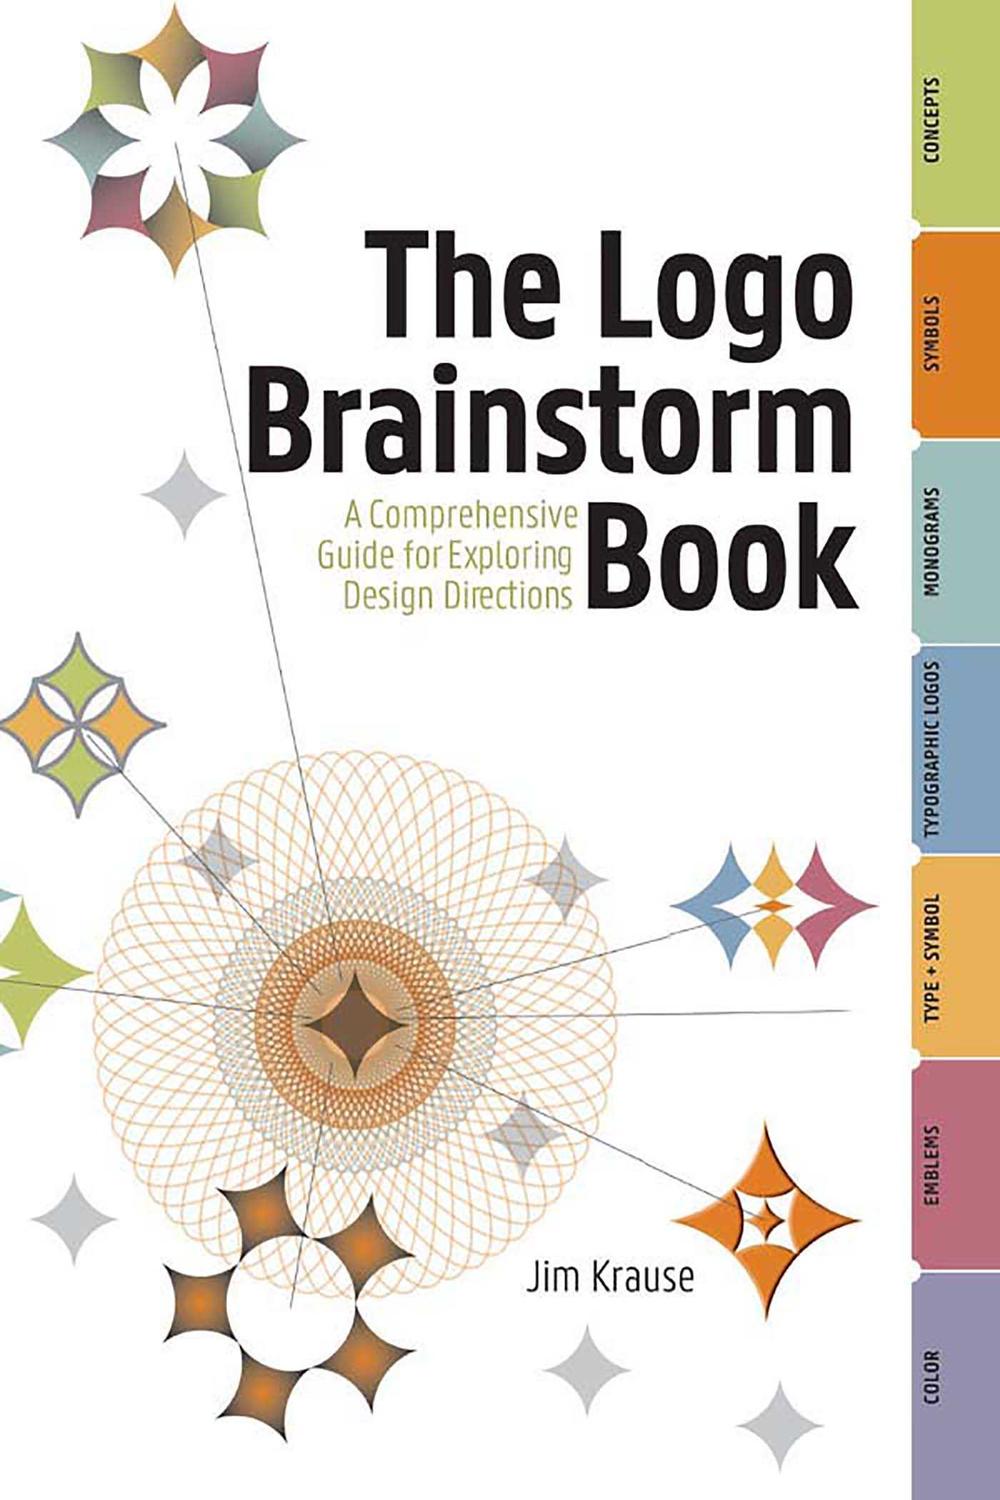 [PDF] The Logo Brainstorm Book by Jim Krause Perlego